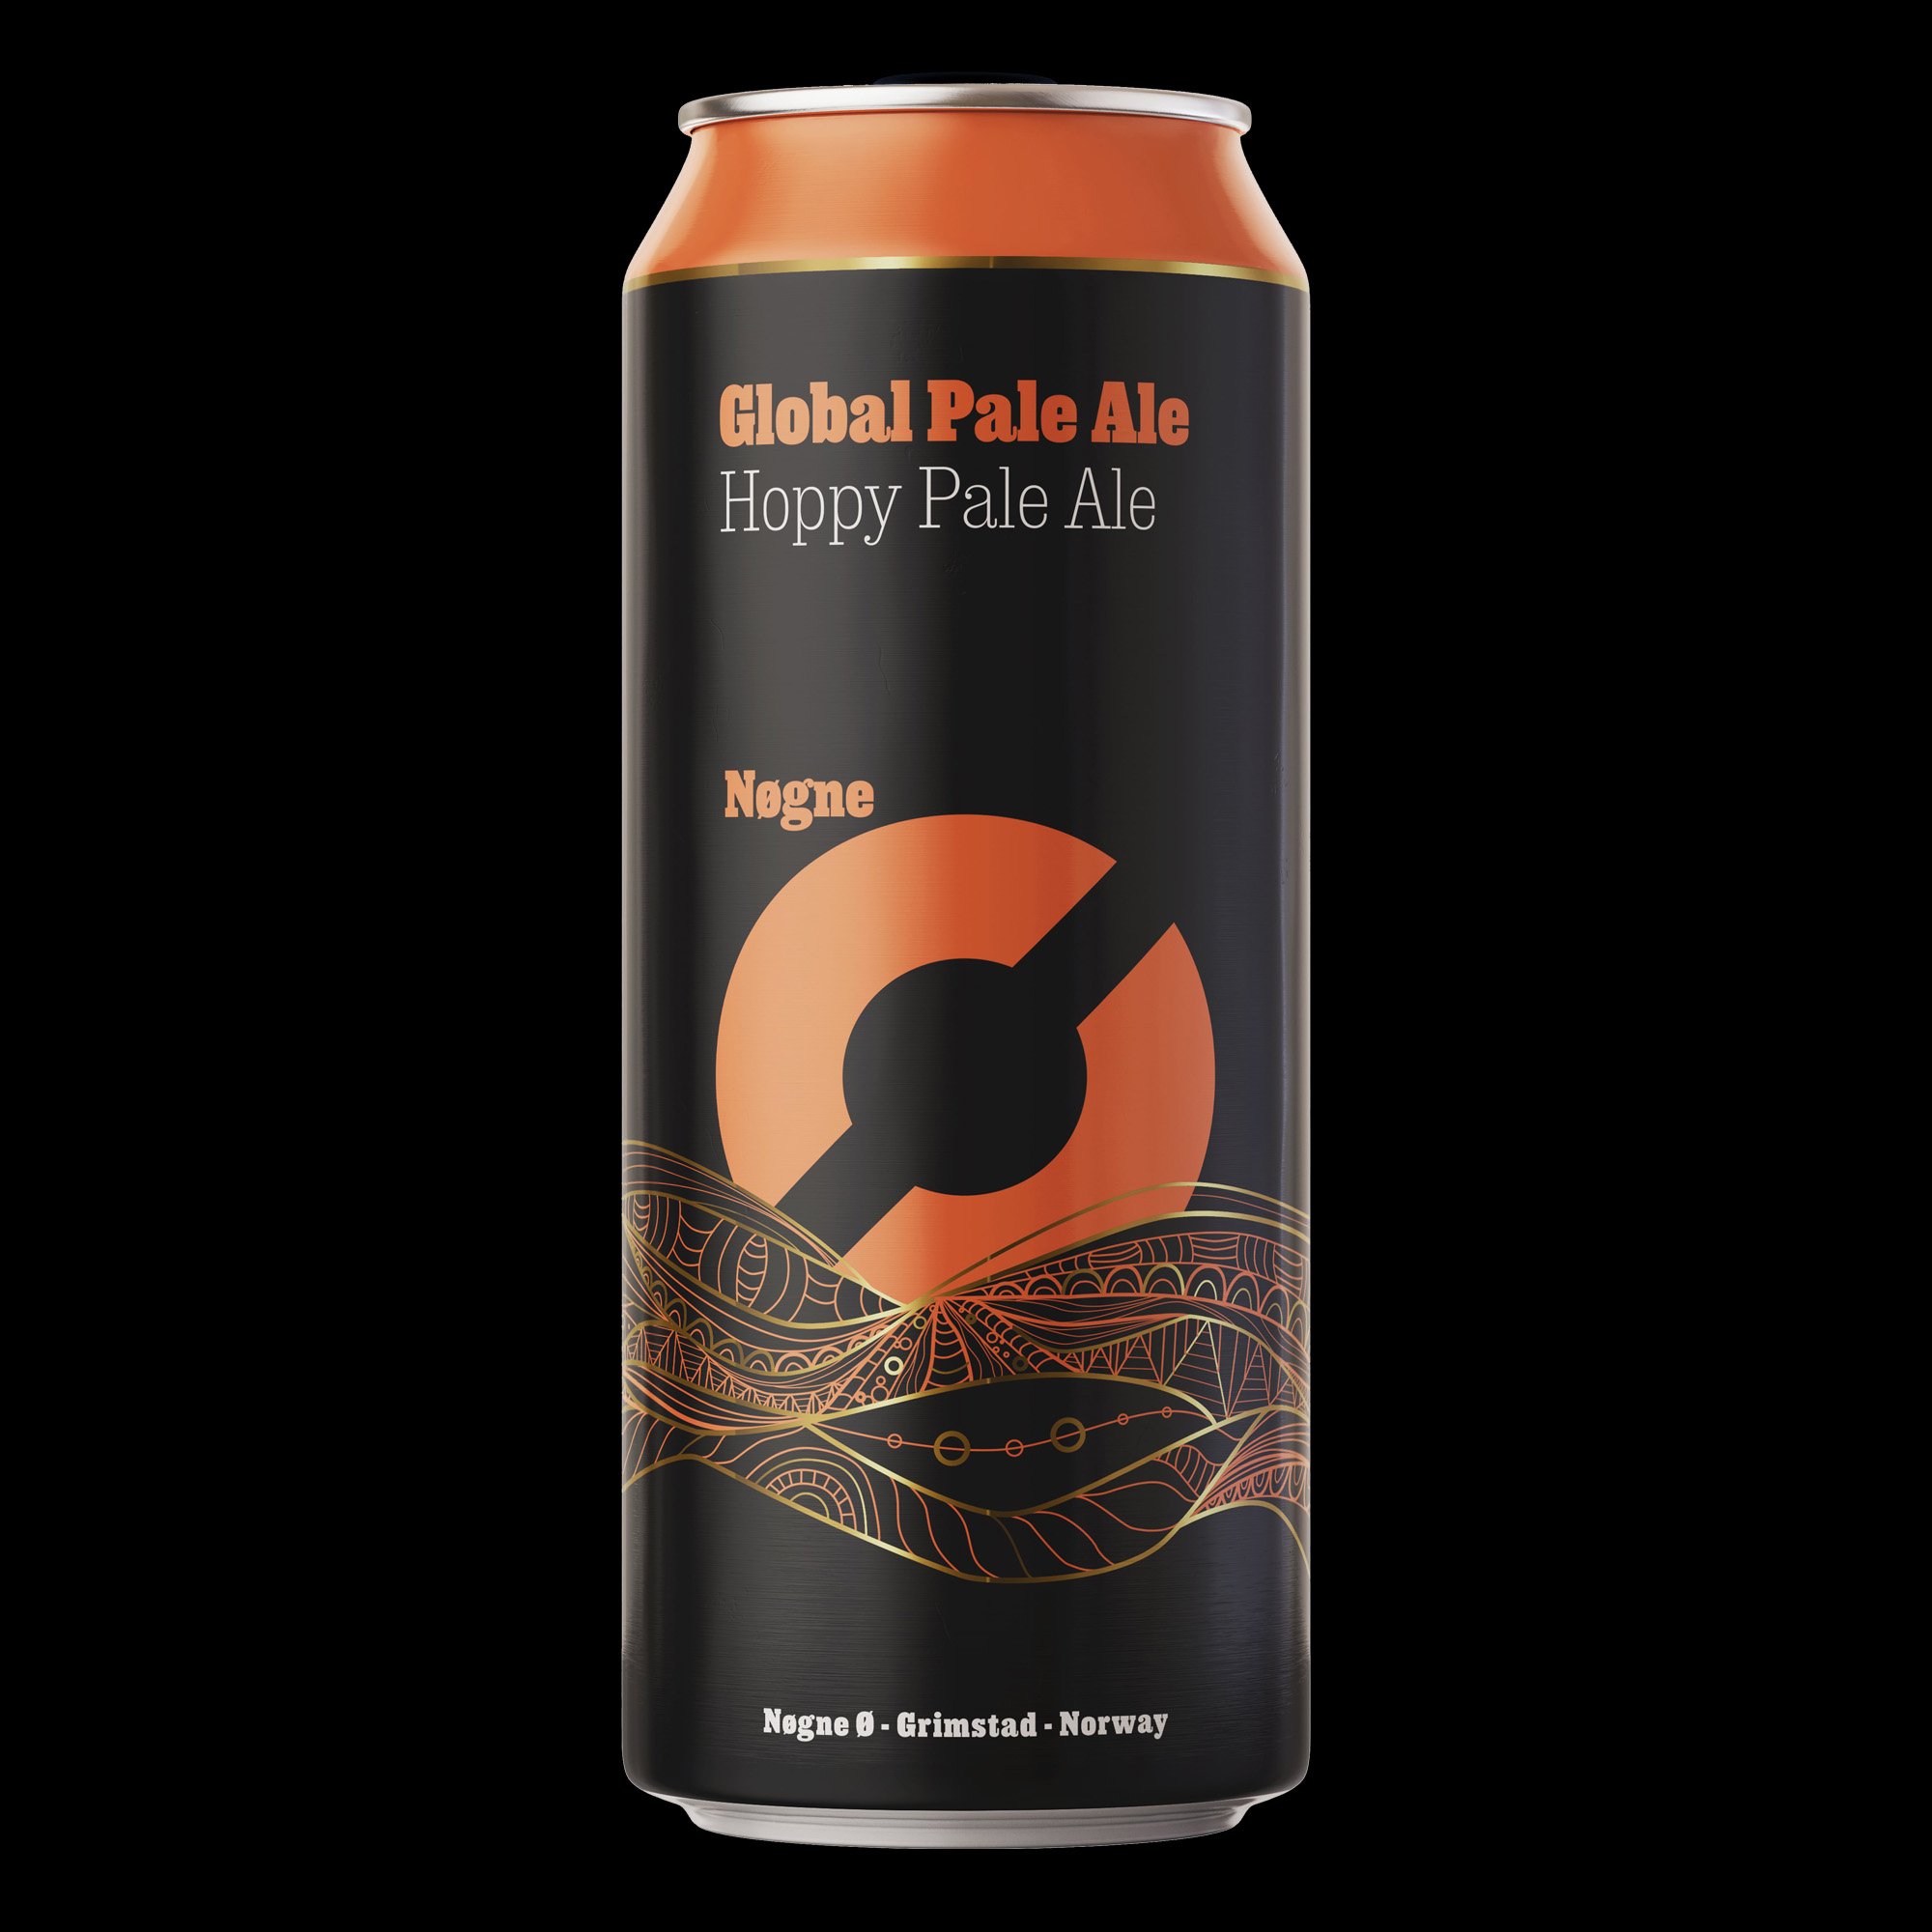 Global Pale Ale